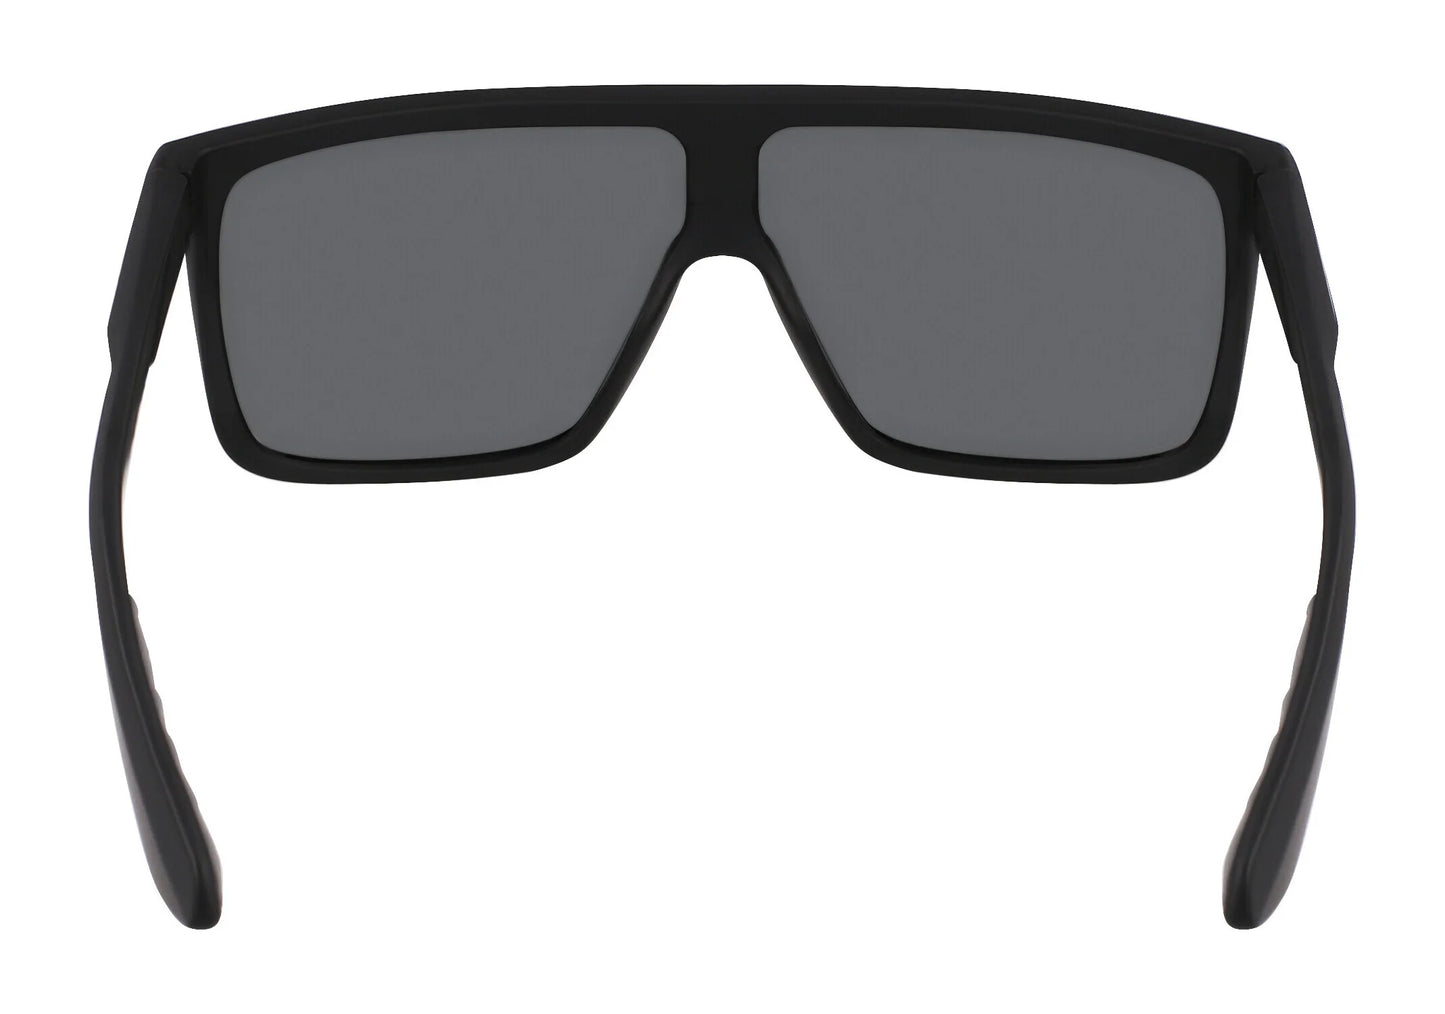 Dragon MOMENTUM H20 Sunglasses | Size 59